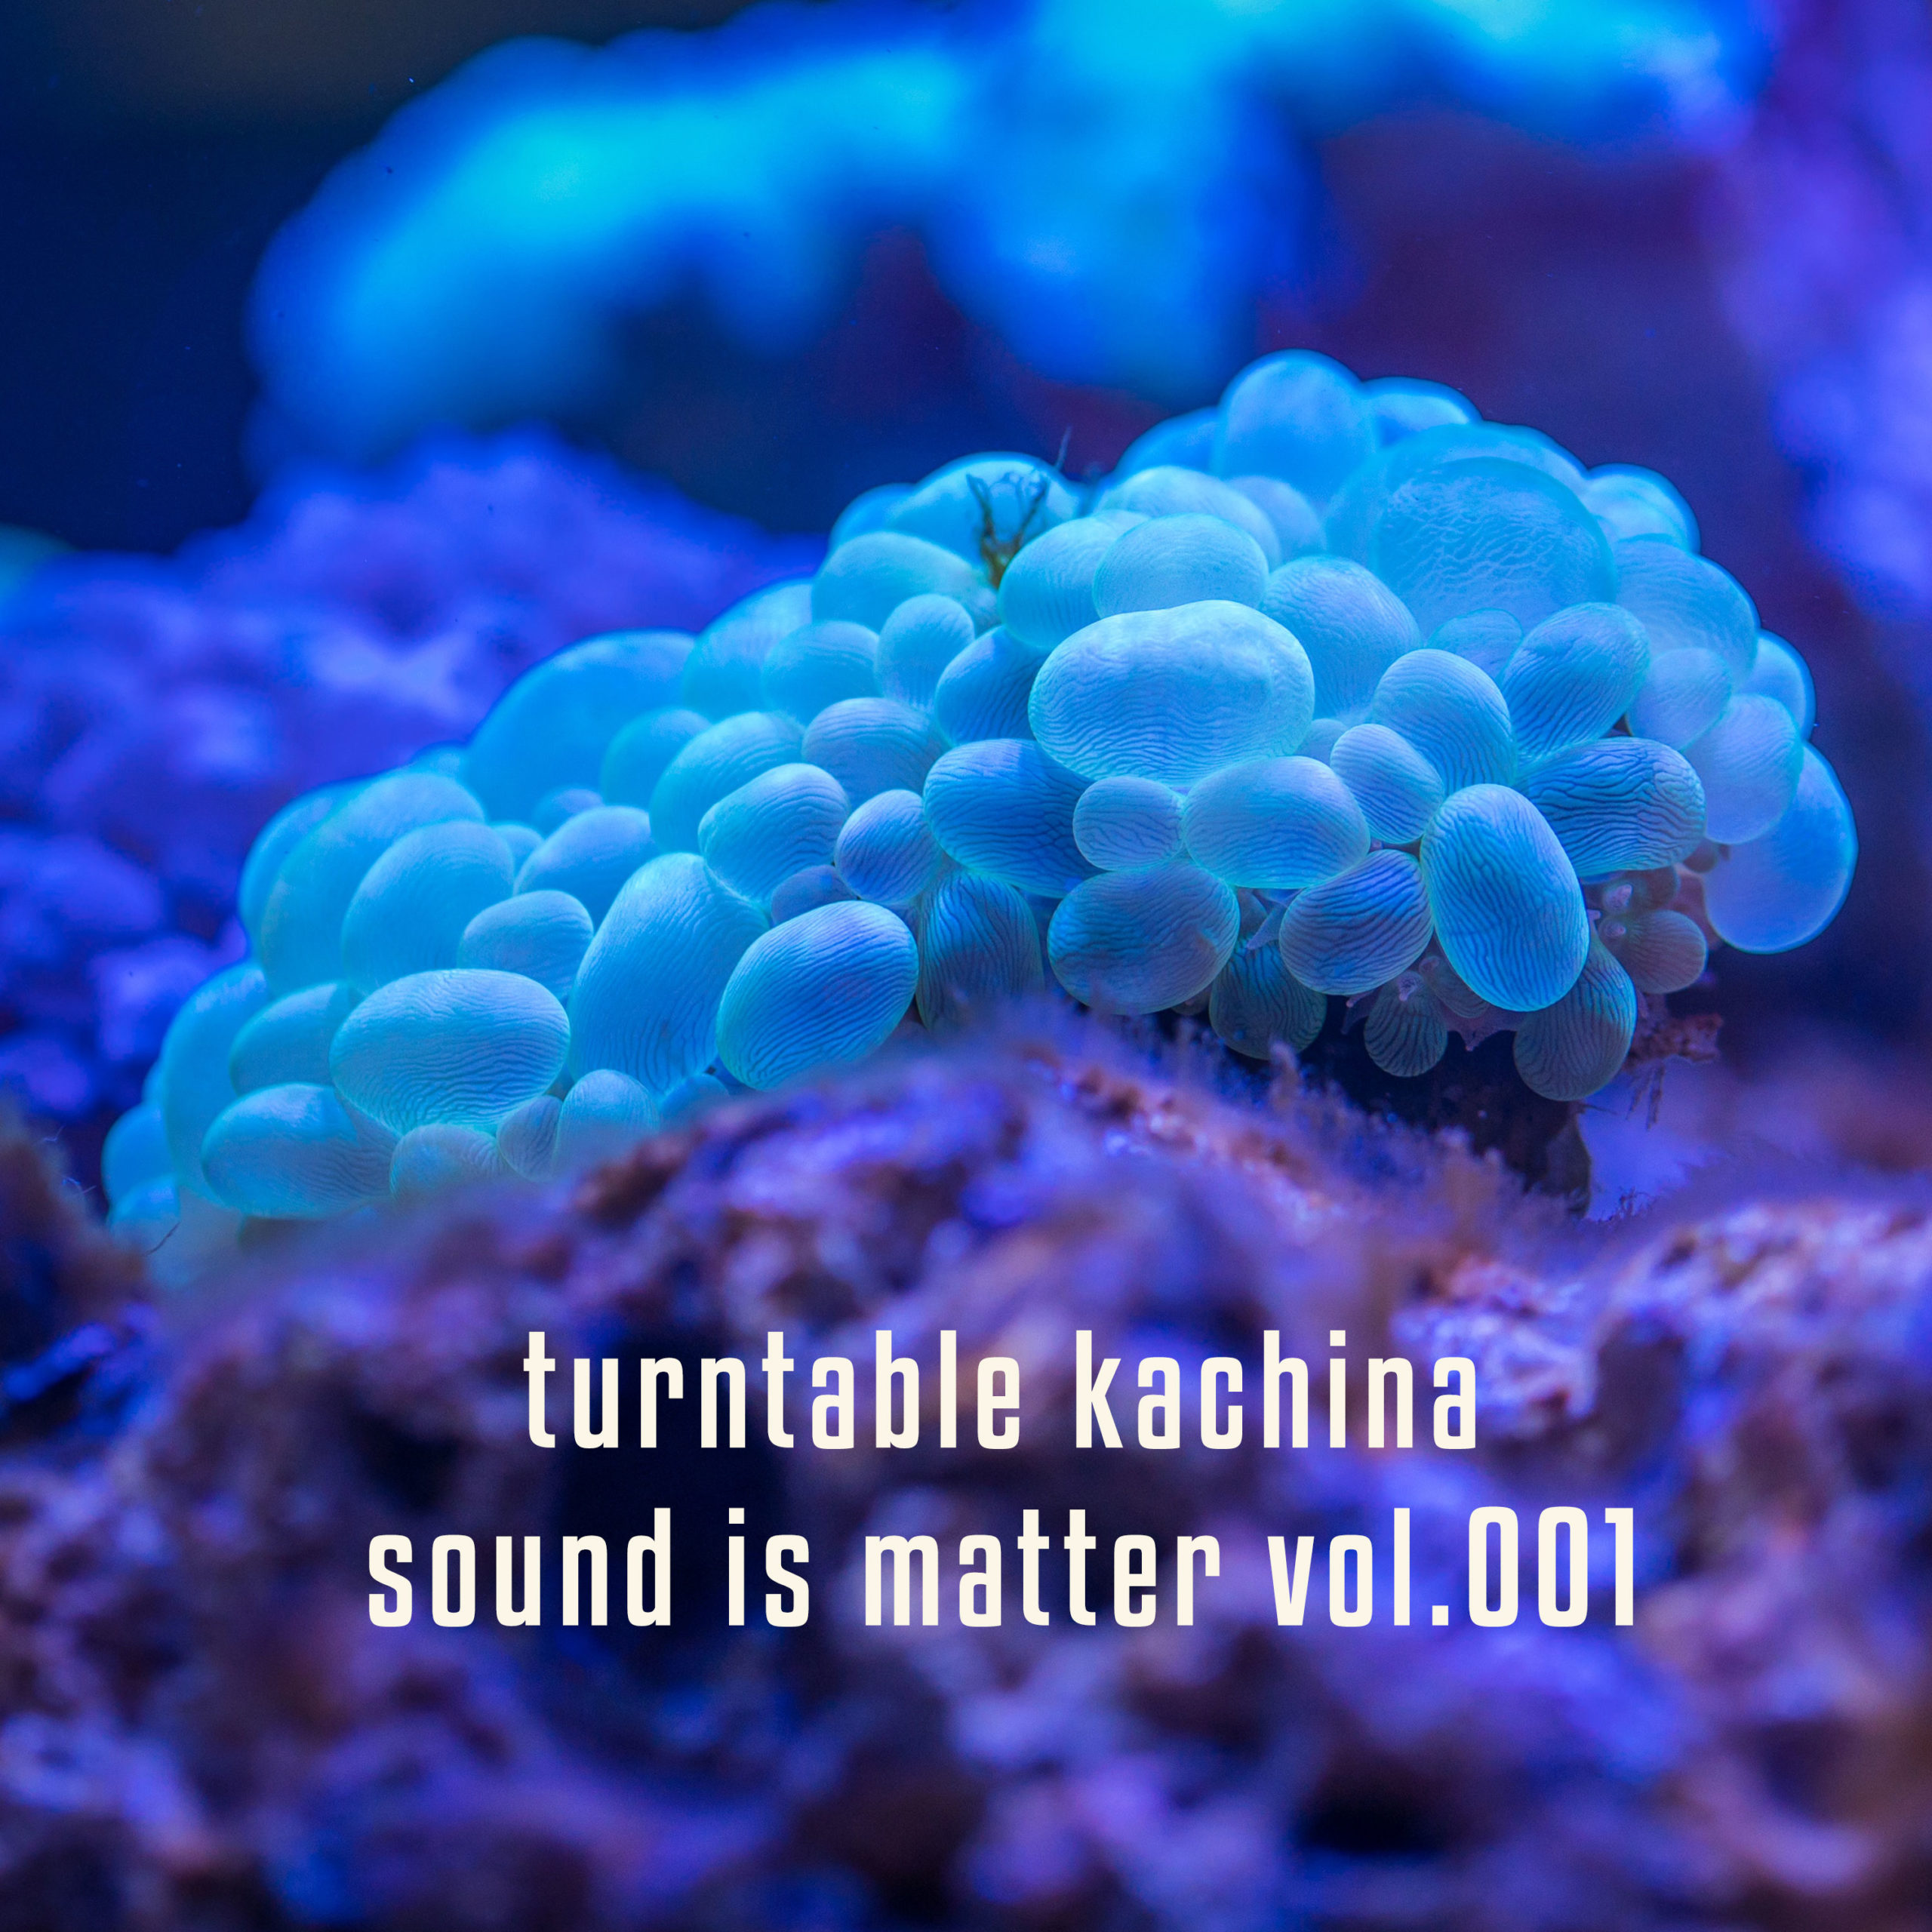 sound-is-matter-vol001--turtable-kachina-album-cover